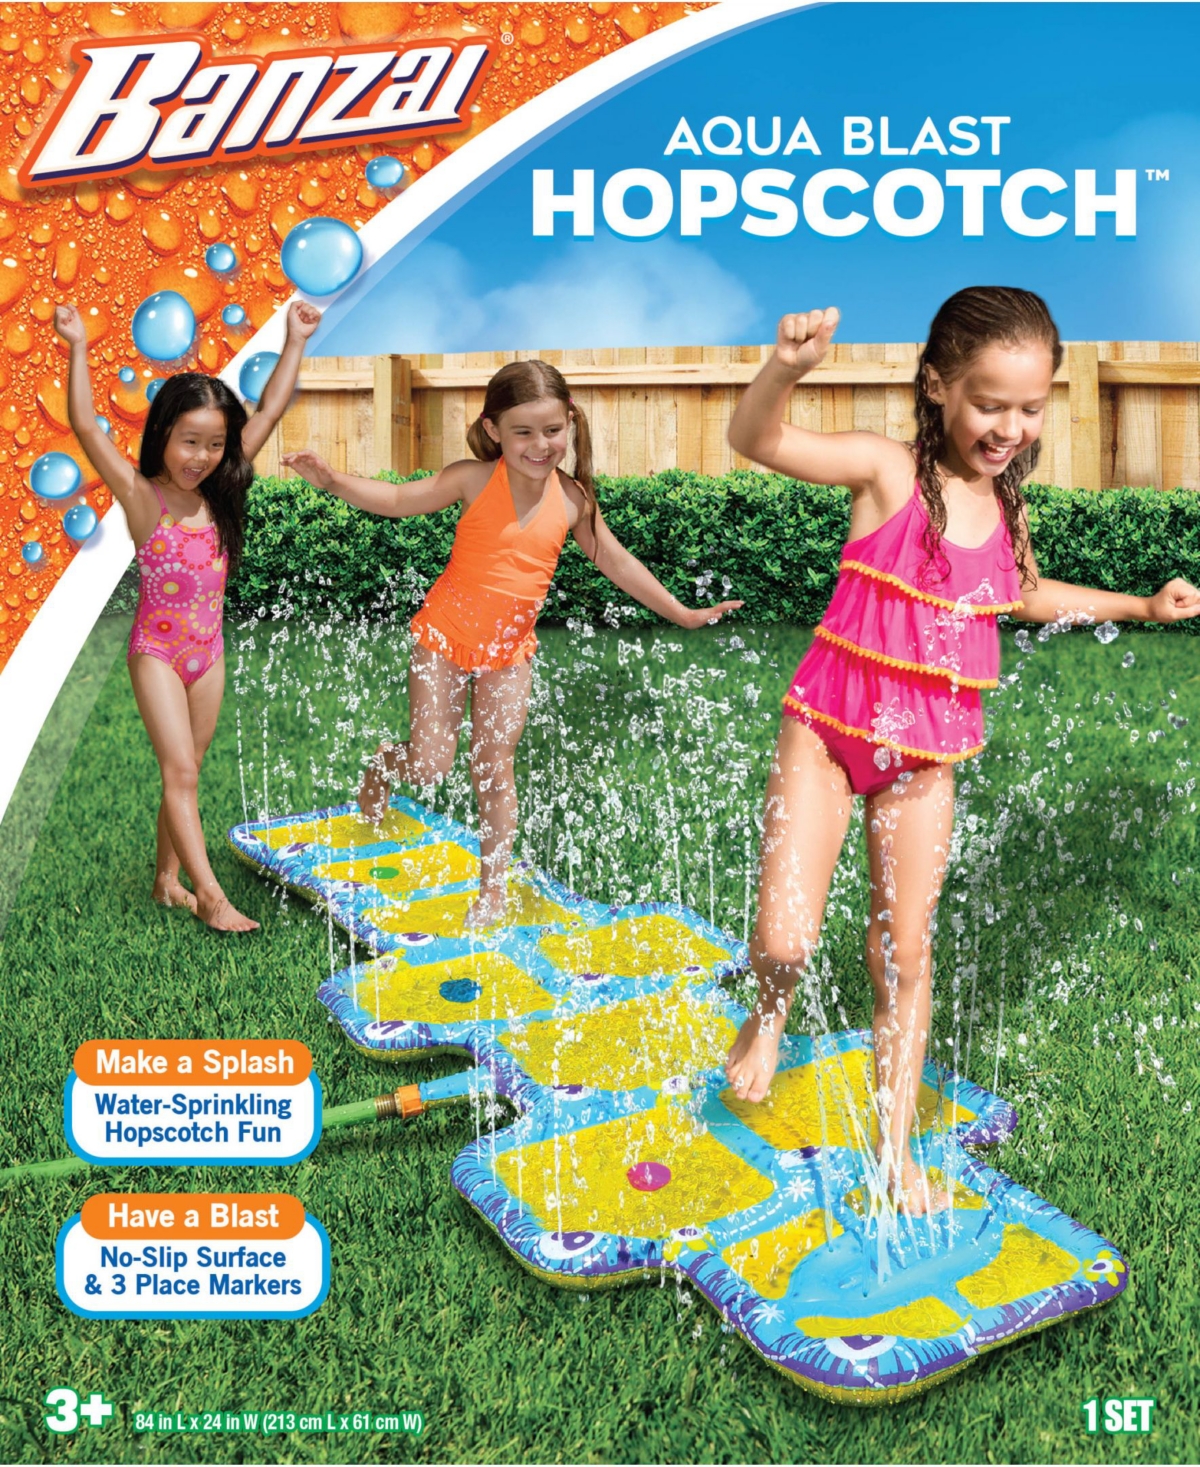 Banzai Aqua Blast Hopscotch Sprinkler Game With No-slip Surface In Multi